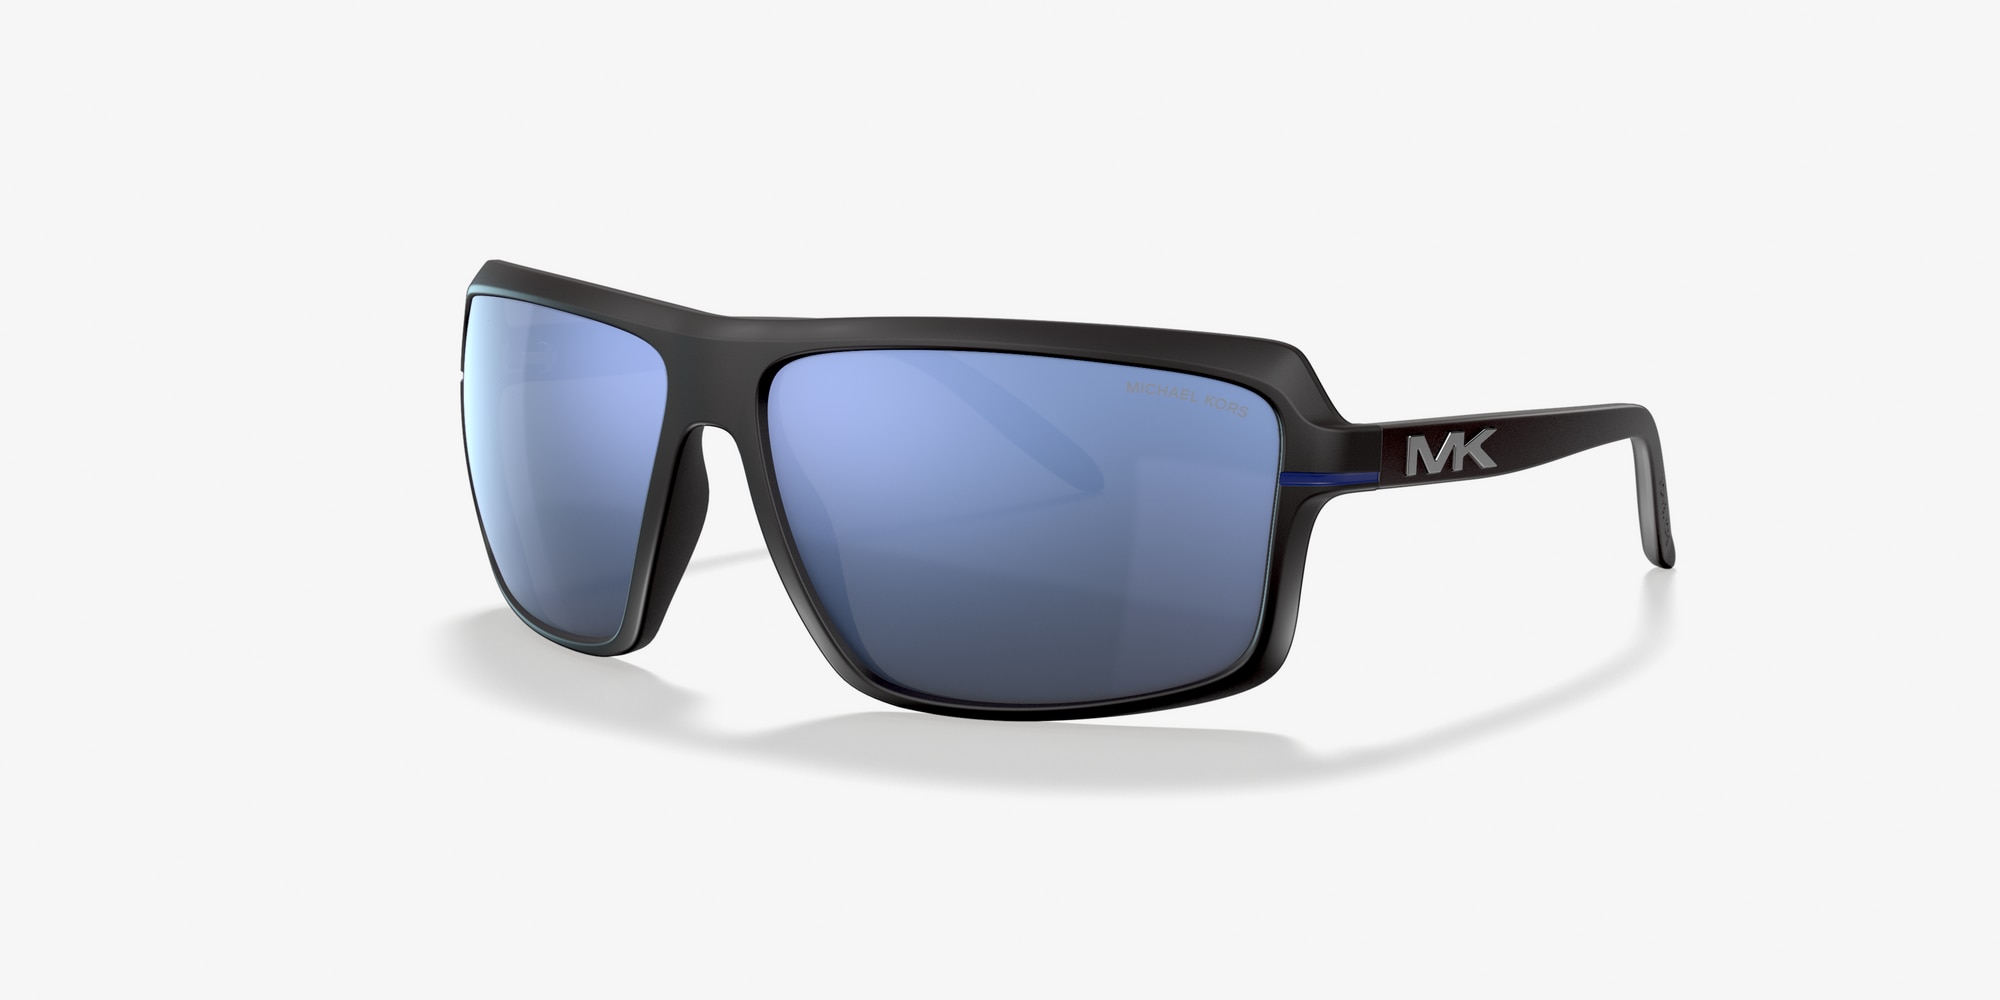 michael kors blue mirrored sunglasses